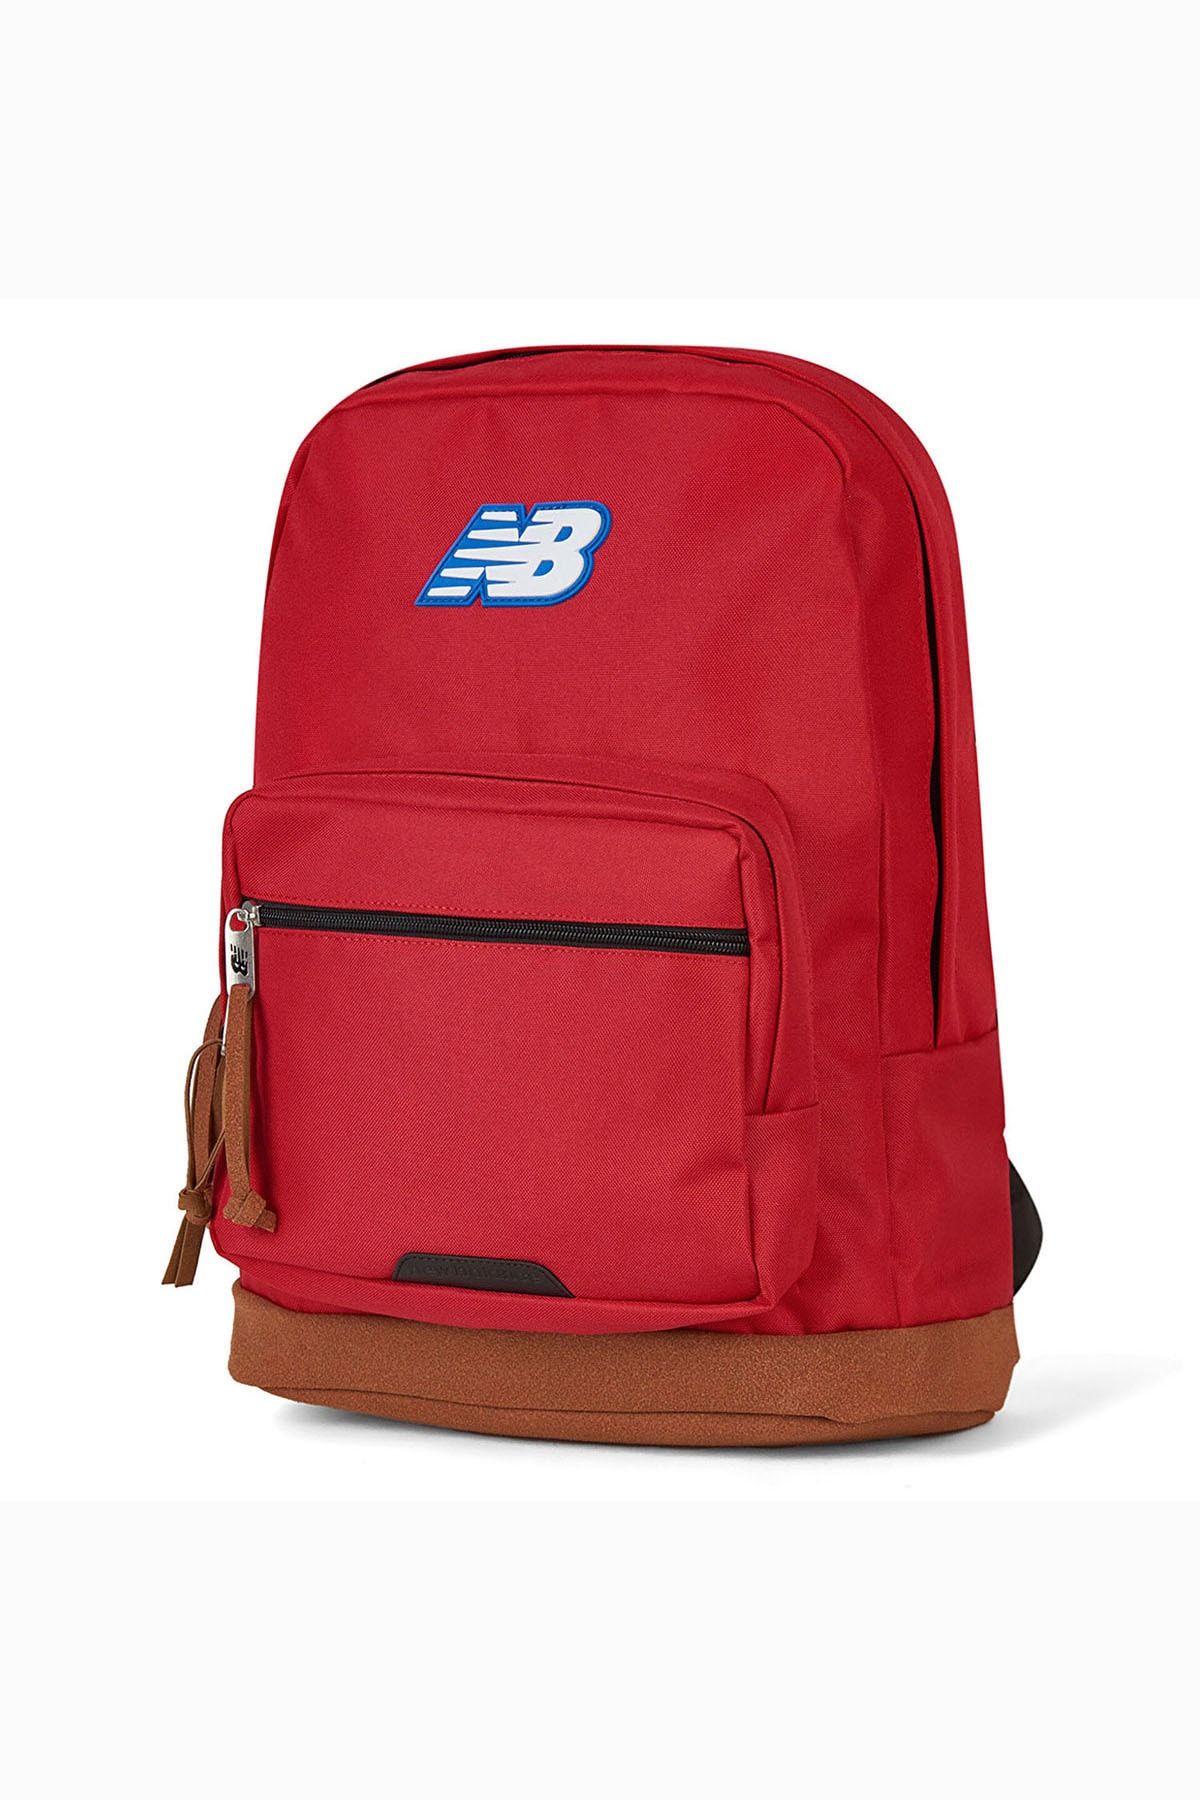 New Balance Çanta Nb Backpack Anb3202-red